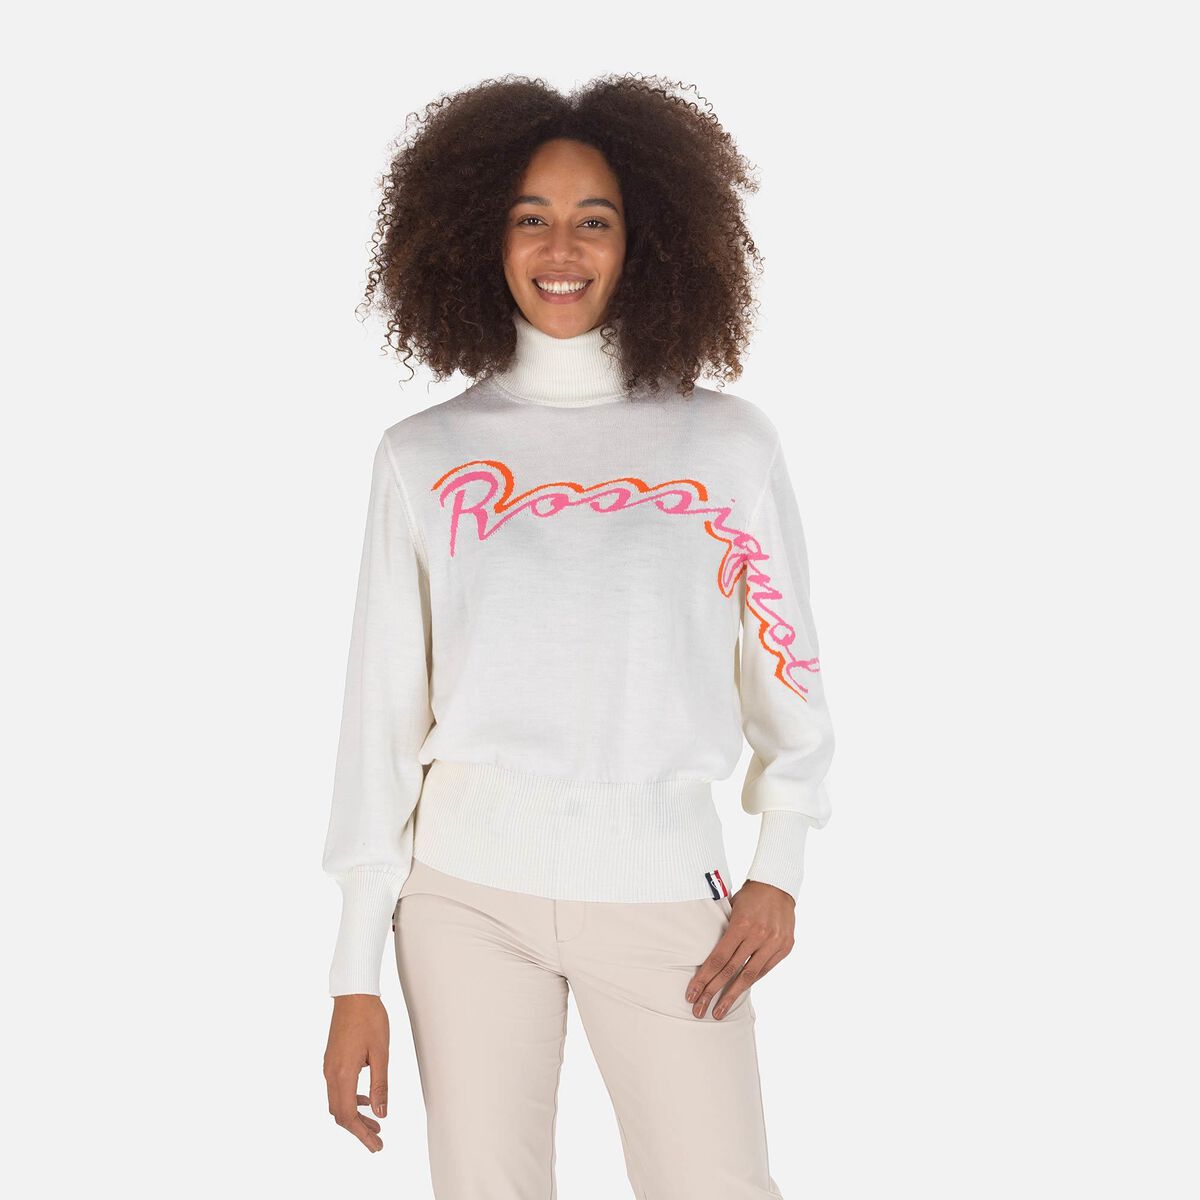 Women's Signature Roll Neck Knit Sweater, T-Shirt & Tops Women, White